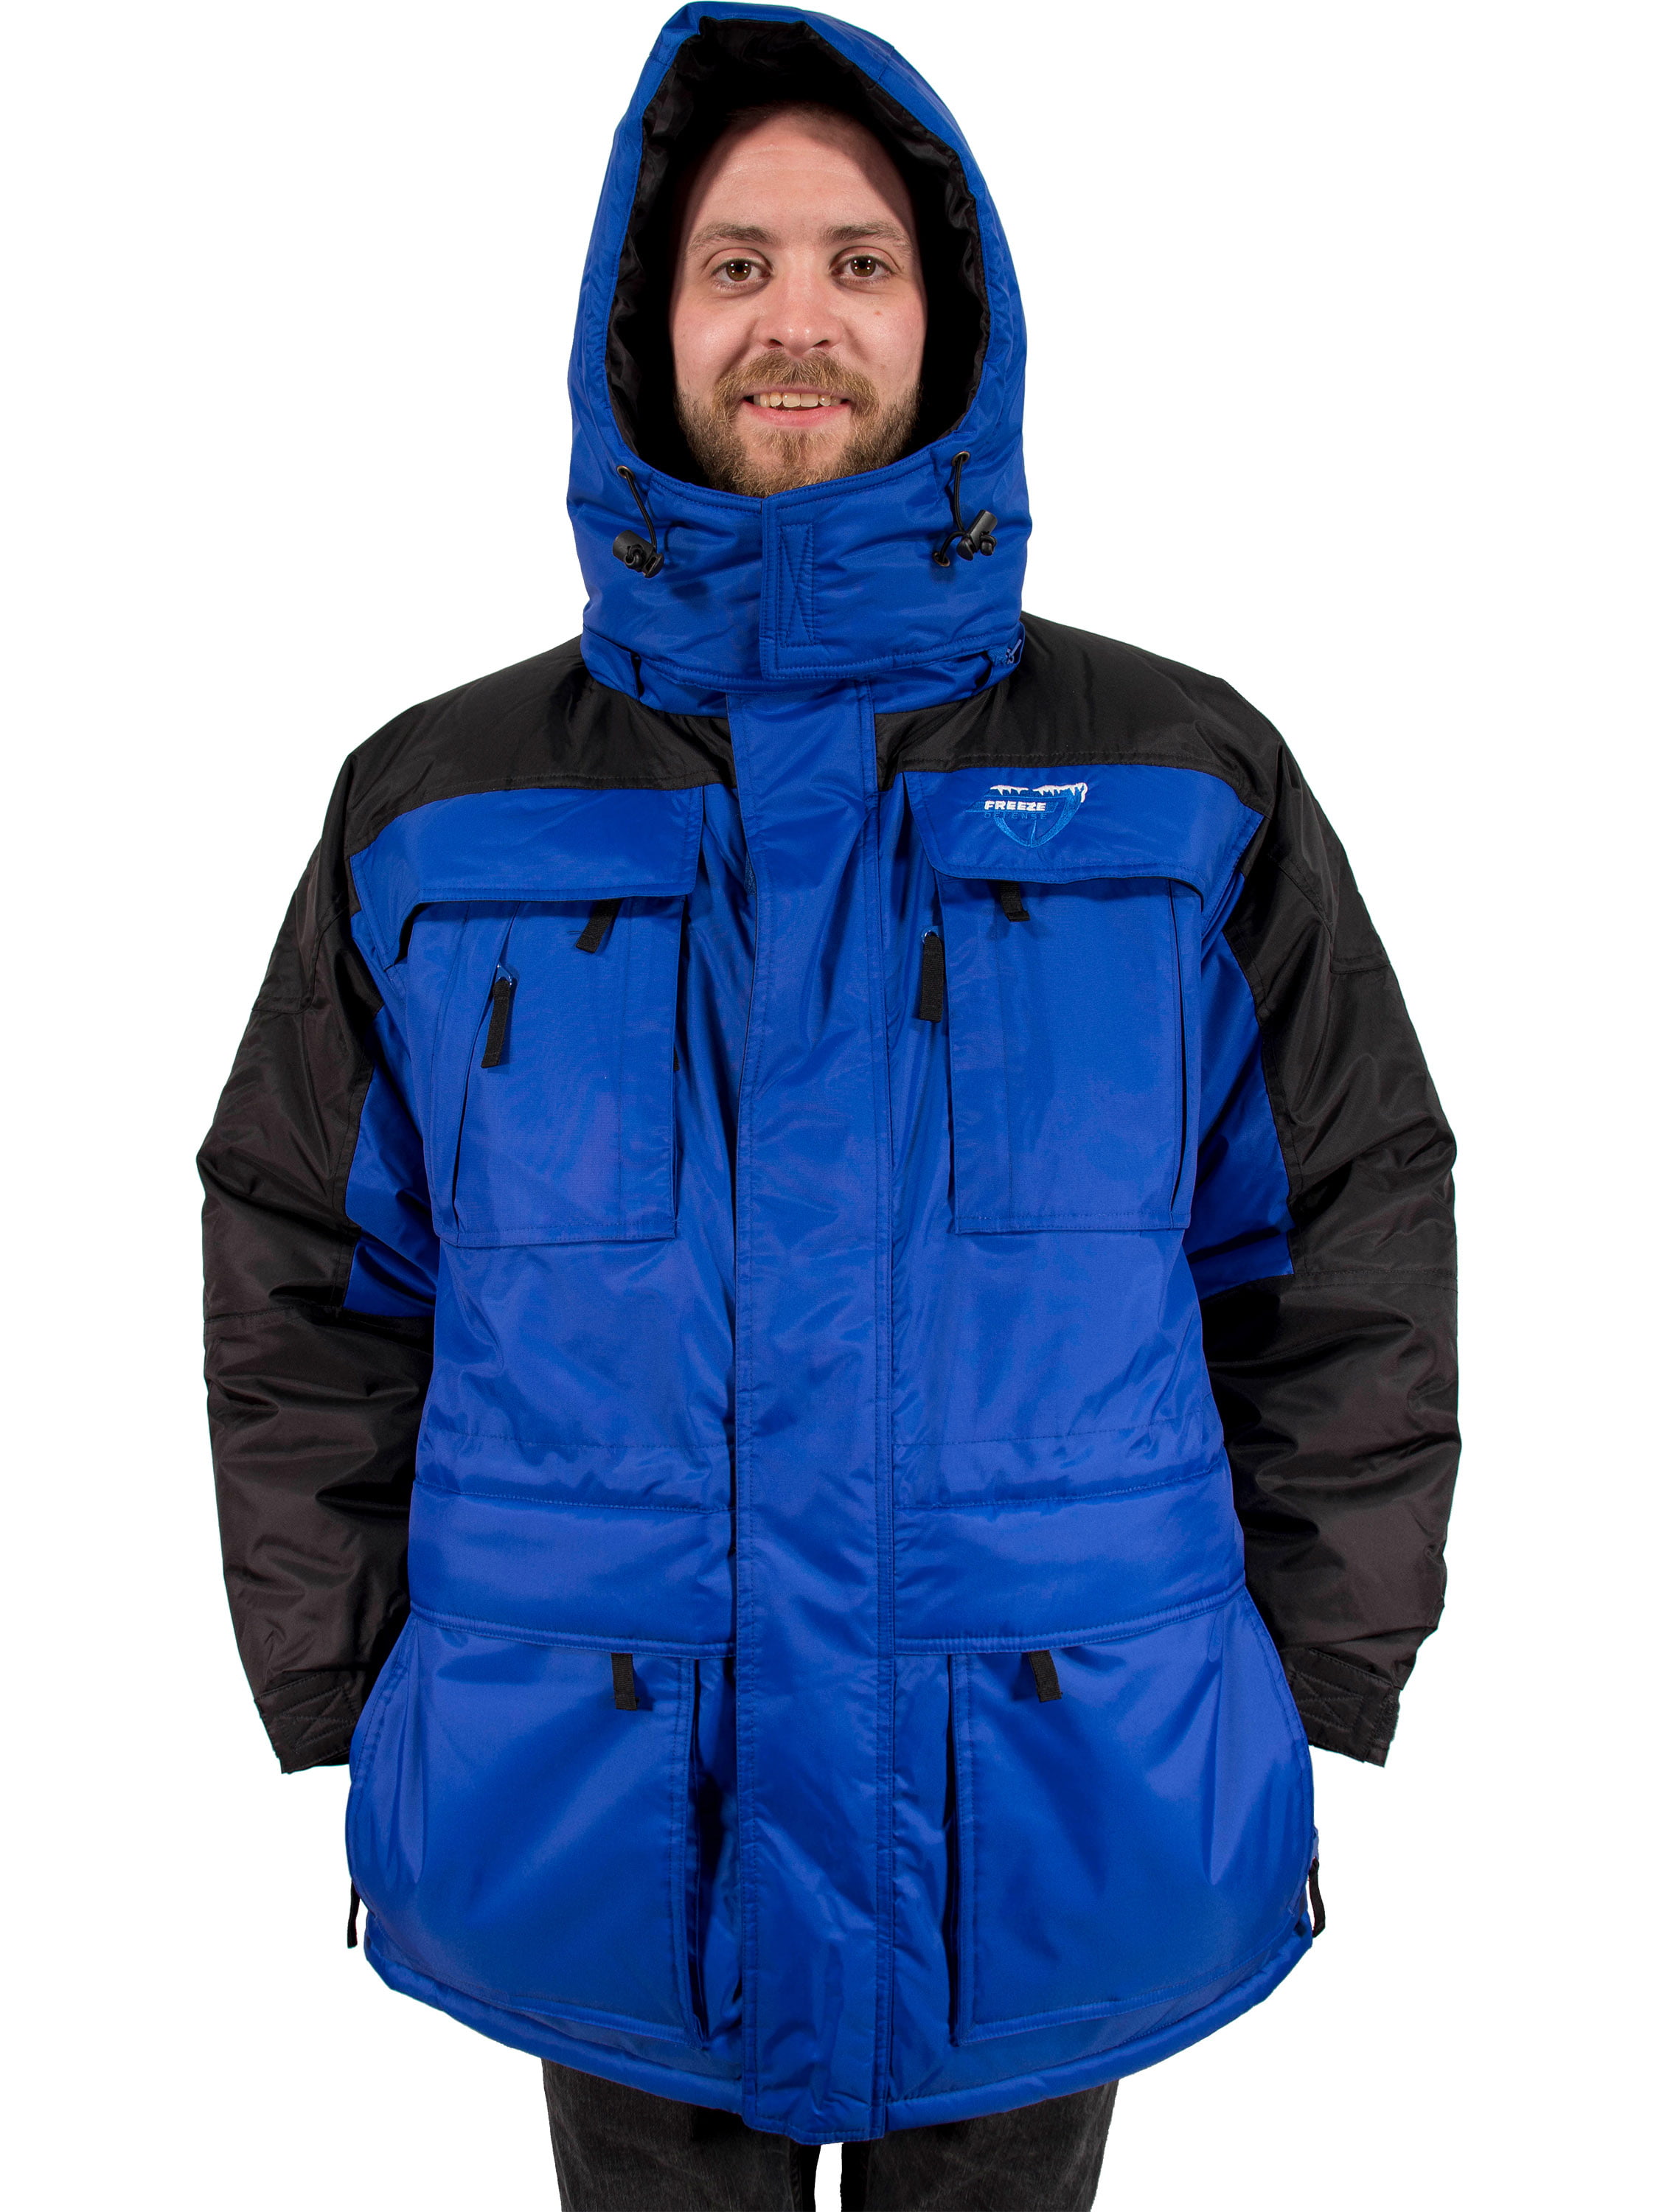 Freeze Defense Warm Men's 3in1 Winter Jacket Coat Parka & Vest (Small, Blue) - image 7 of 10